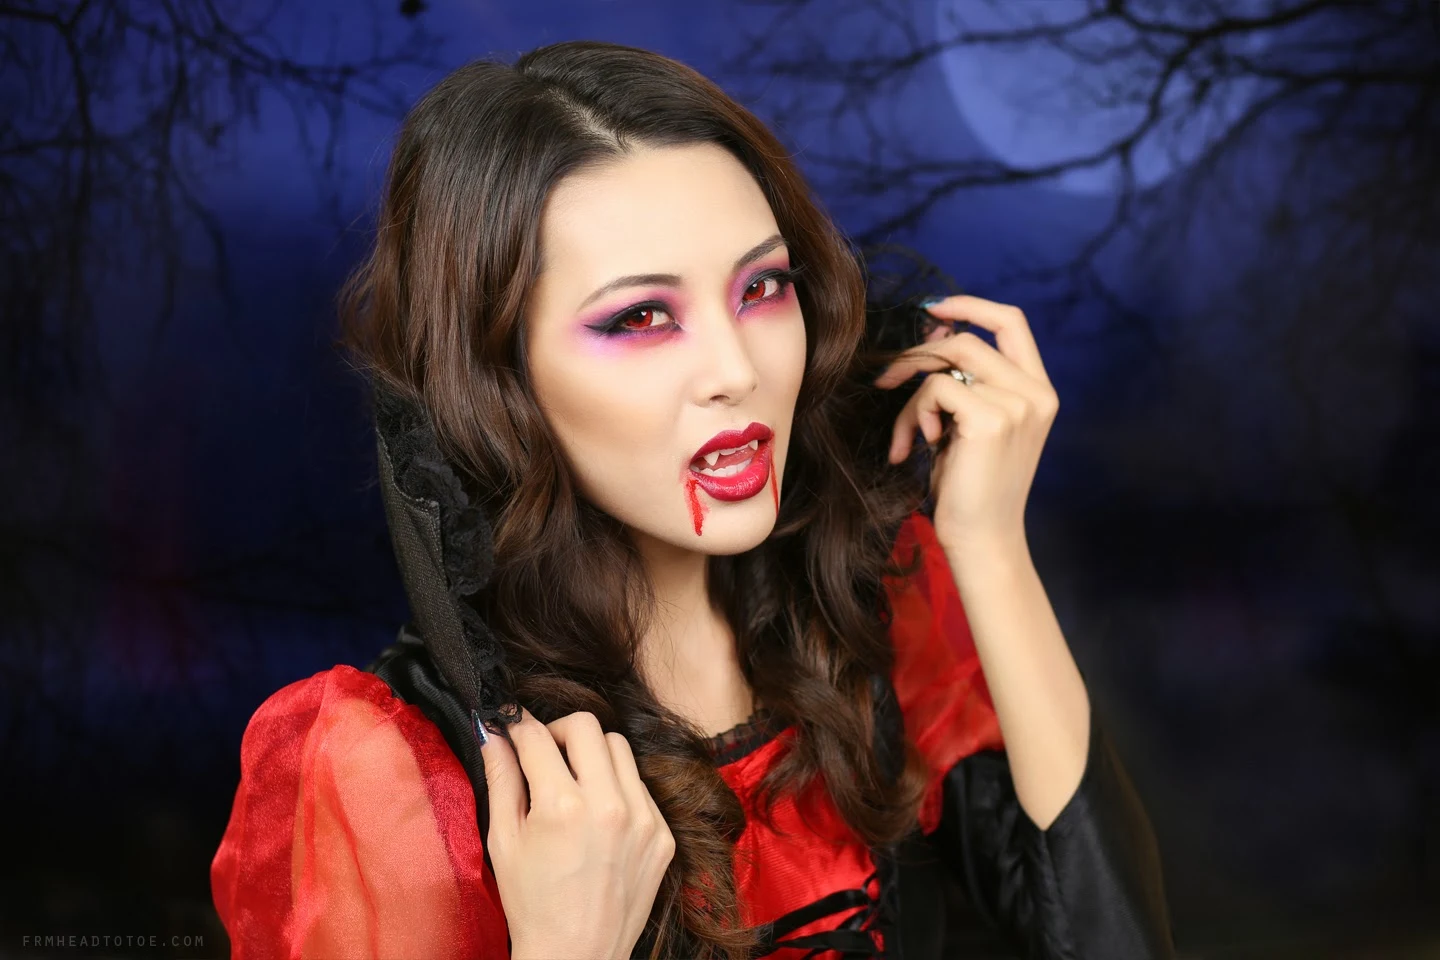 TUTORIAL Sexy Vampire Makeup Halloween 2013 From Head To Toe